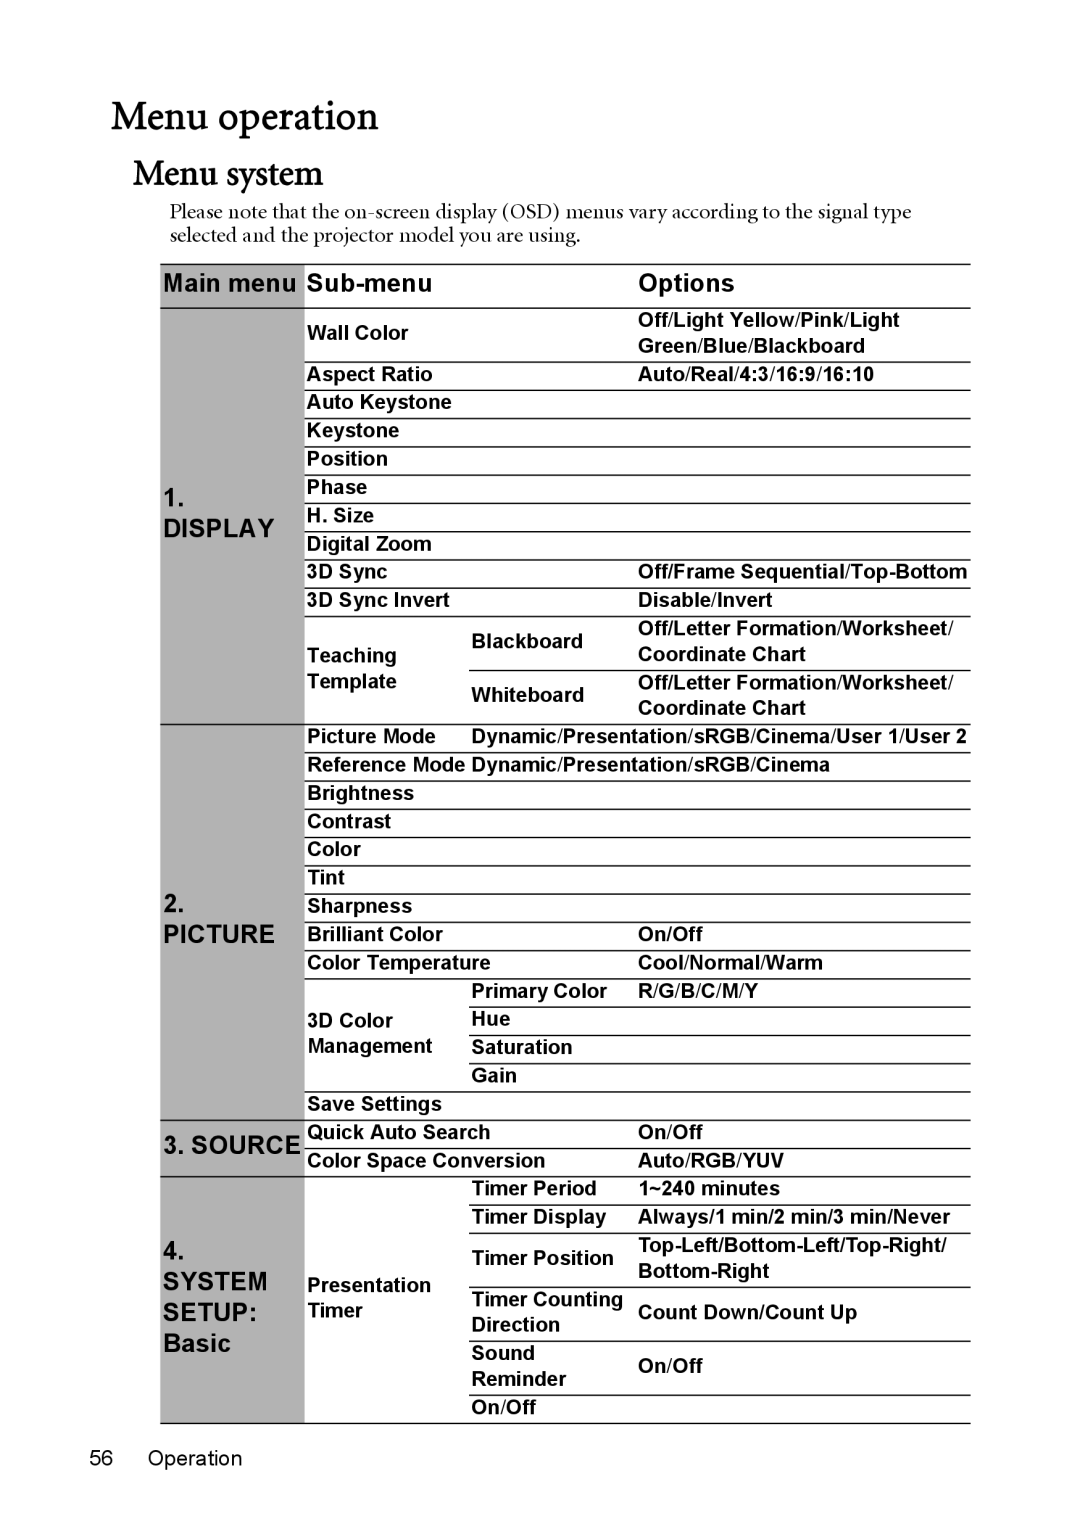 BenQ MX764 user manual Menu operation, Menu system, Main menu Sub-menu Options, Basic 